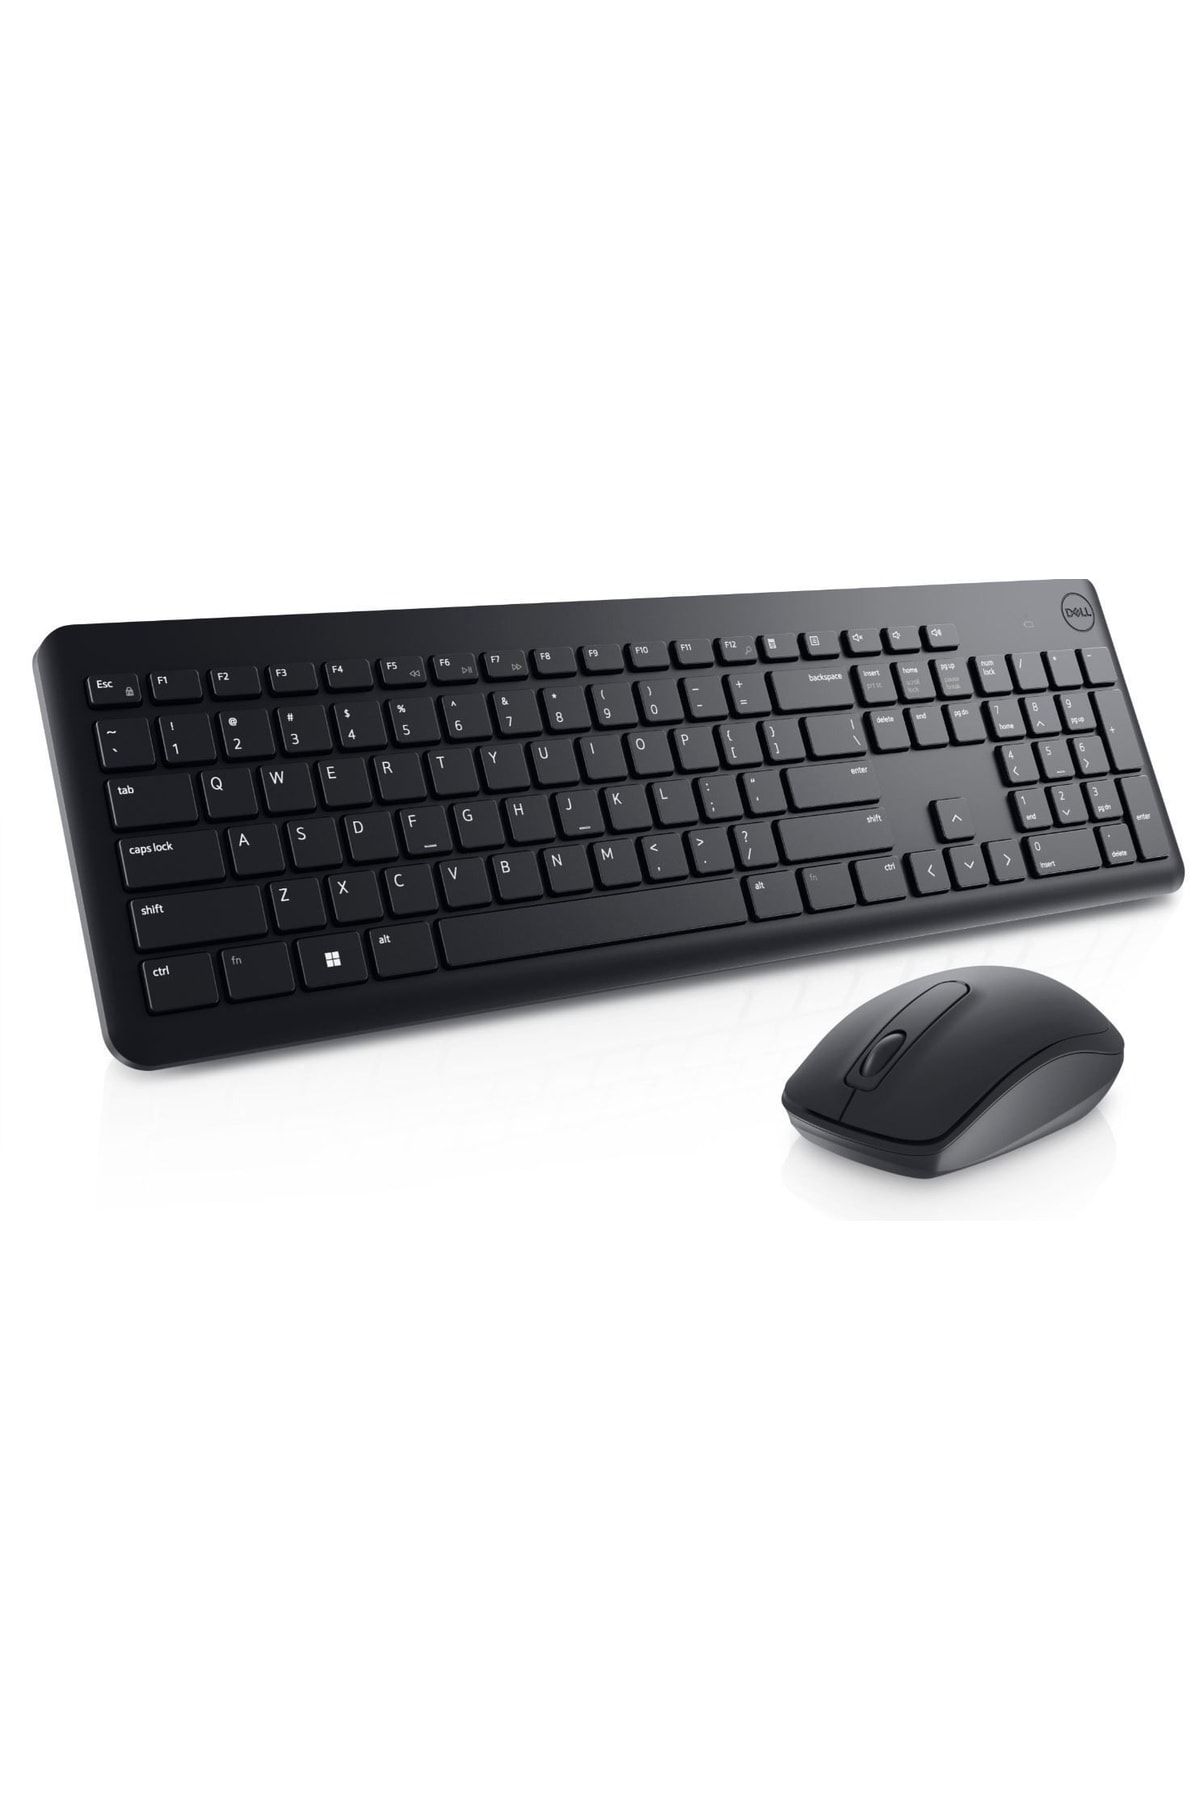 Dell 580-akgı Wireless Keyboard And Mouse-km3322w Turkish Qwerty Modern Tasarım 826334